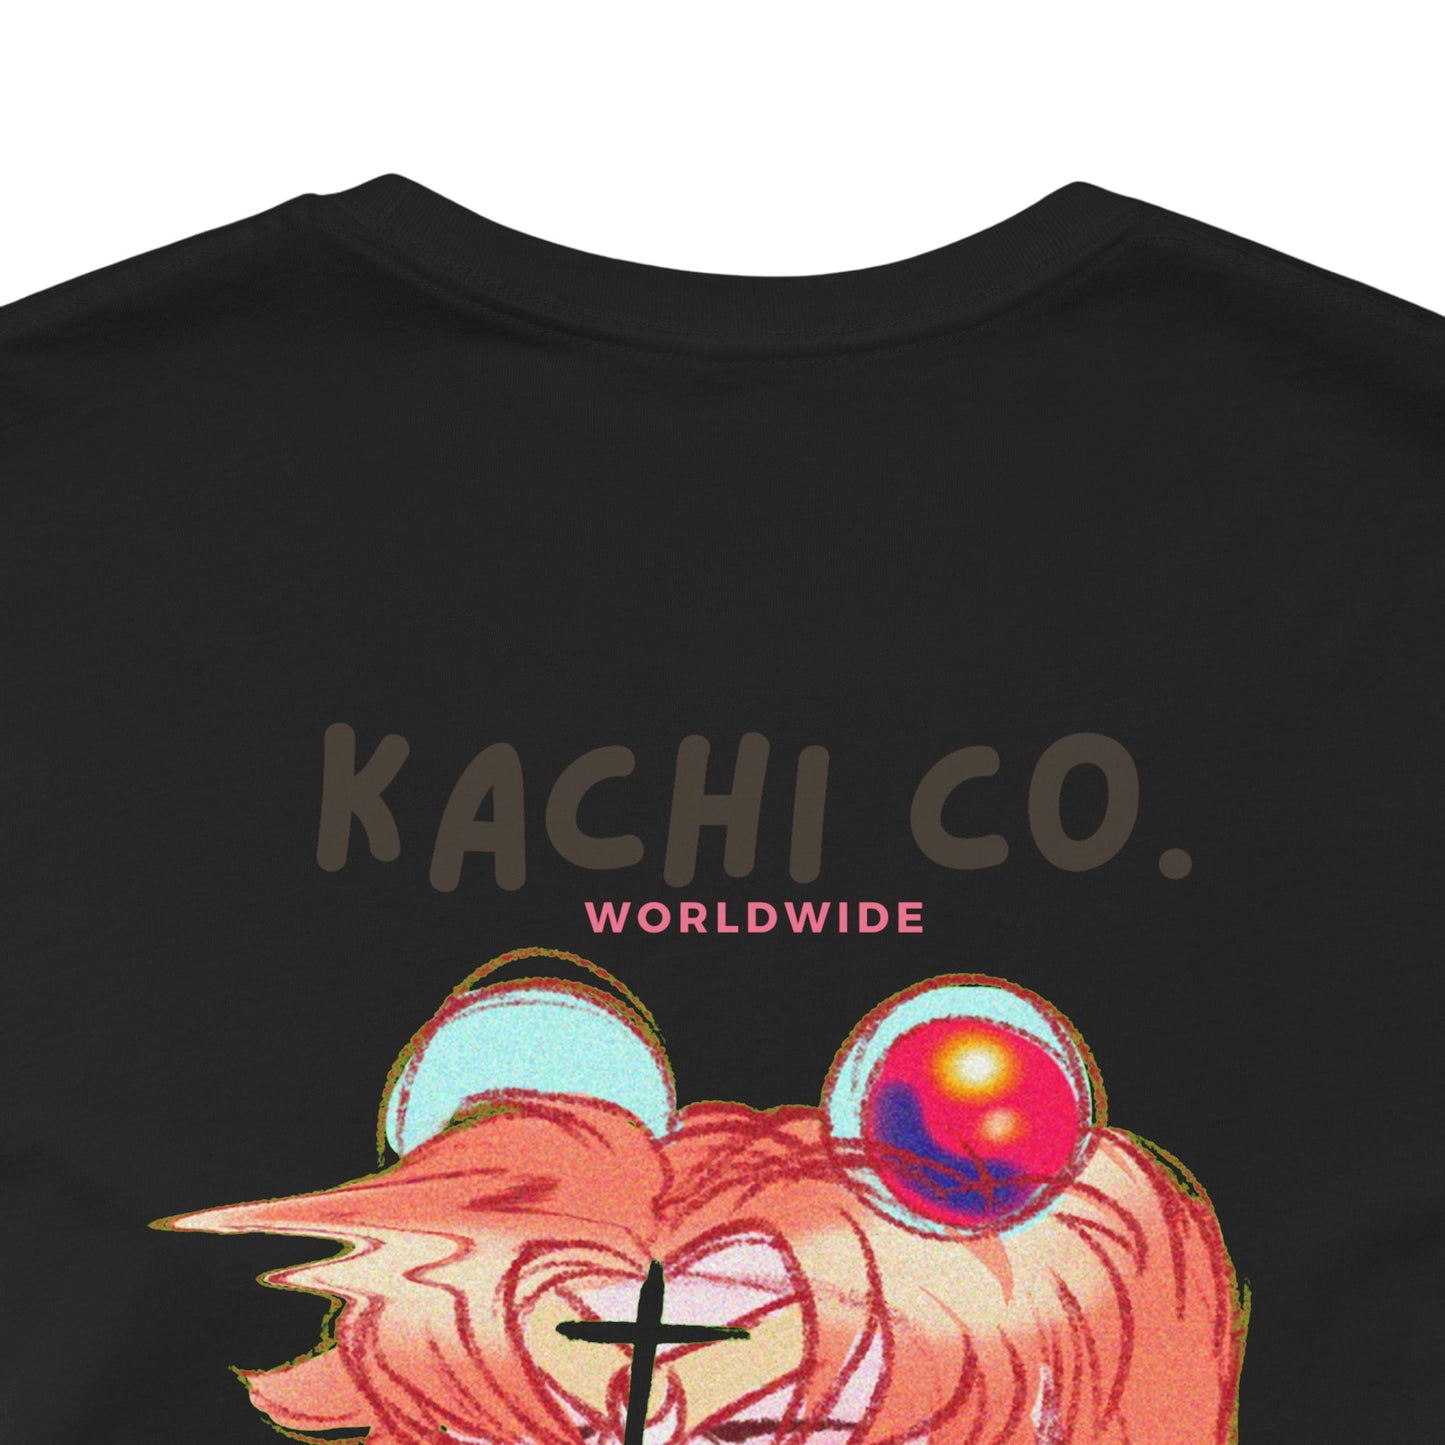 Kachi Co Logo Short Sleeve Tee